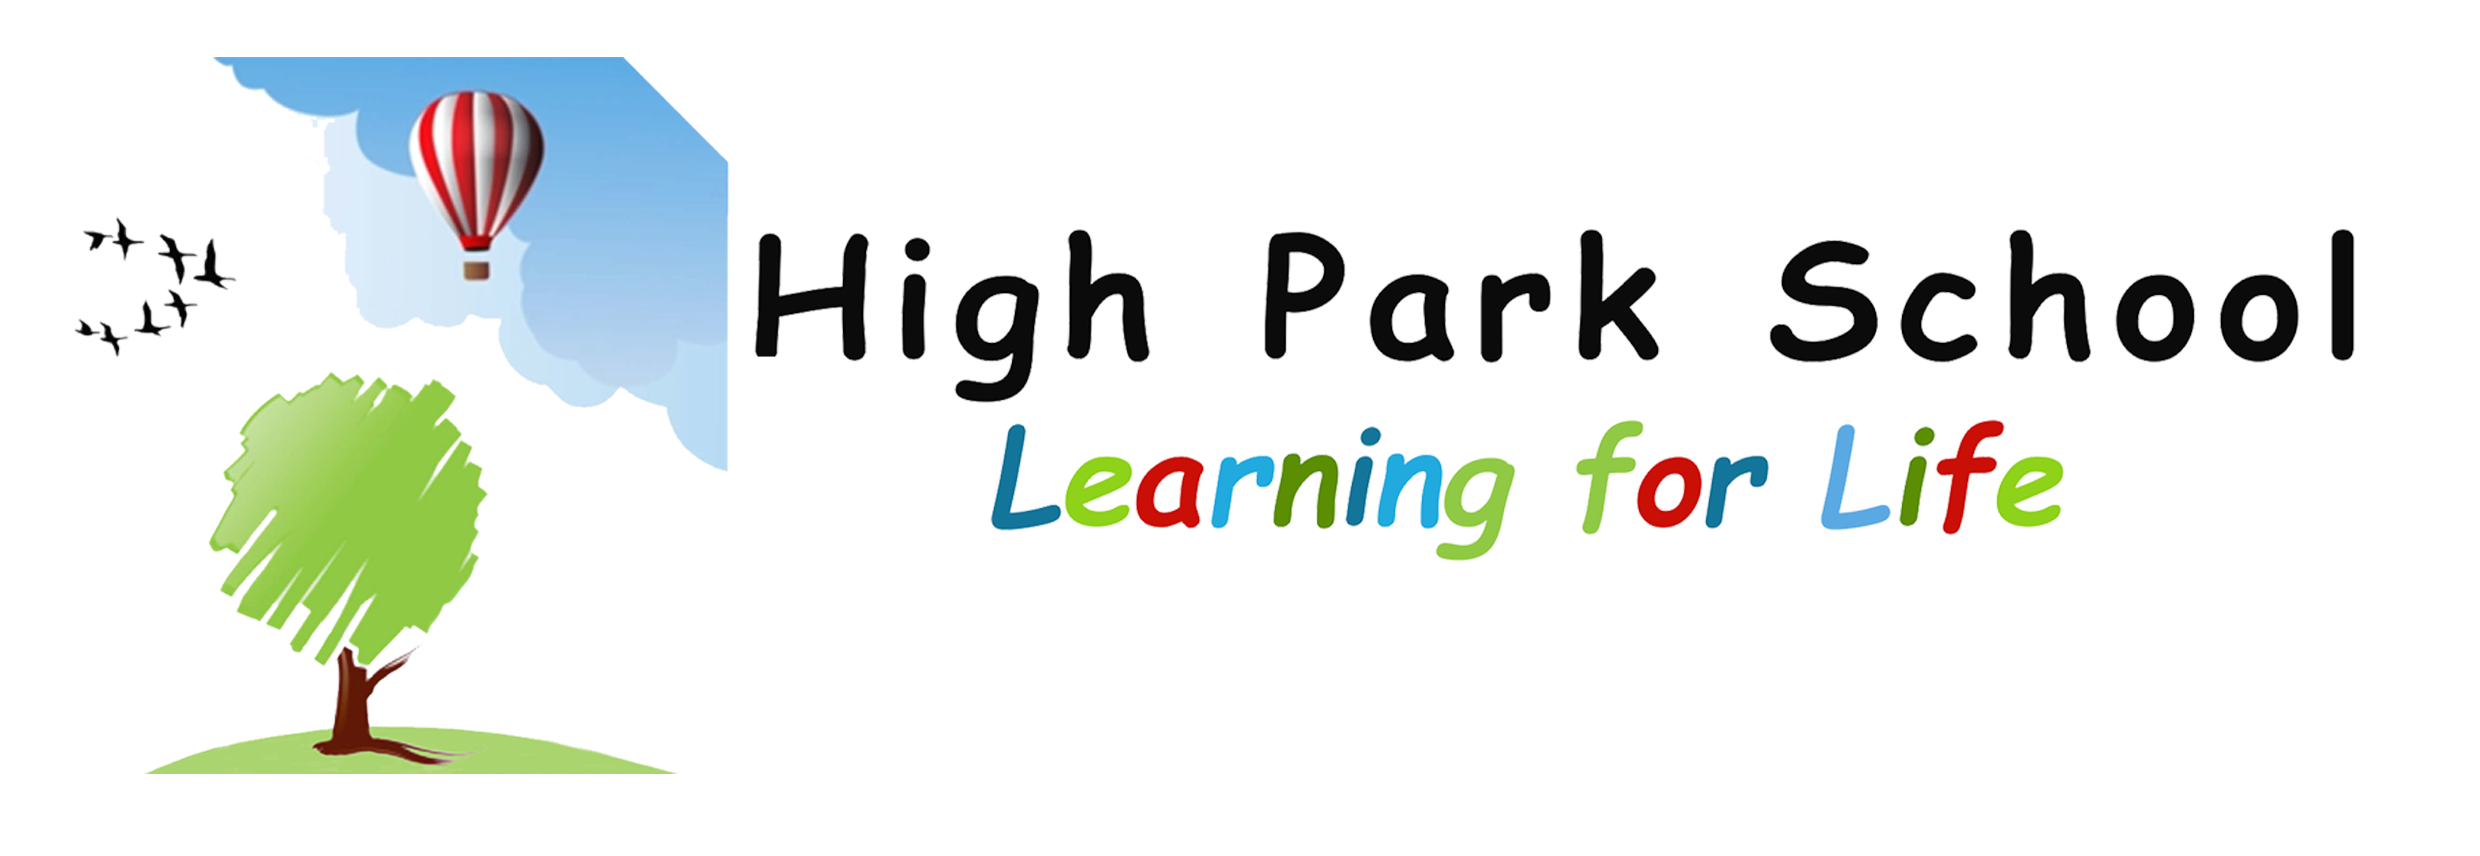 High Park School logo